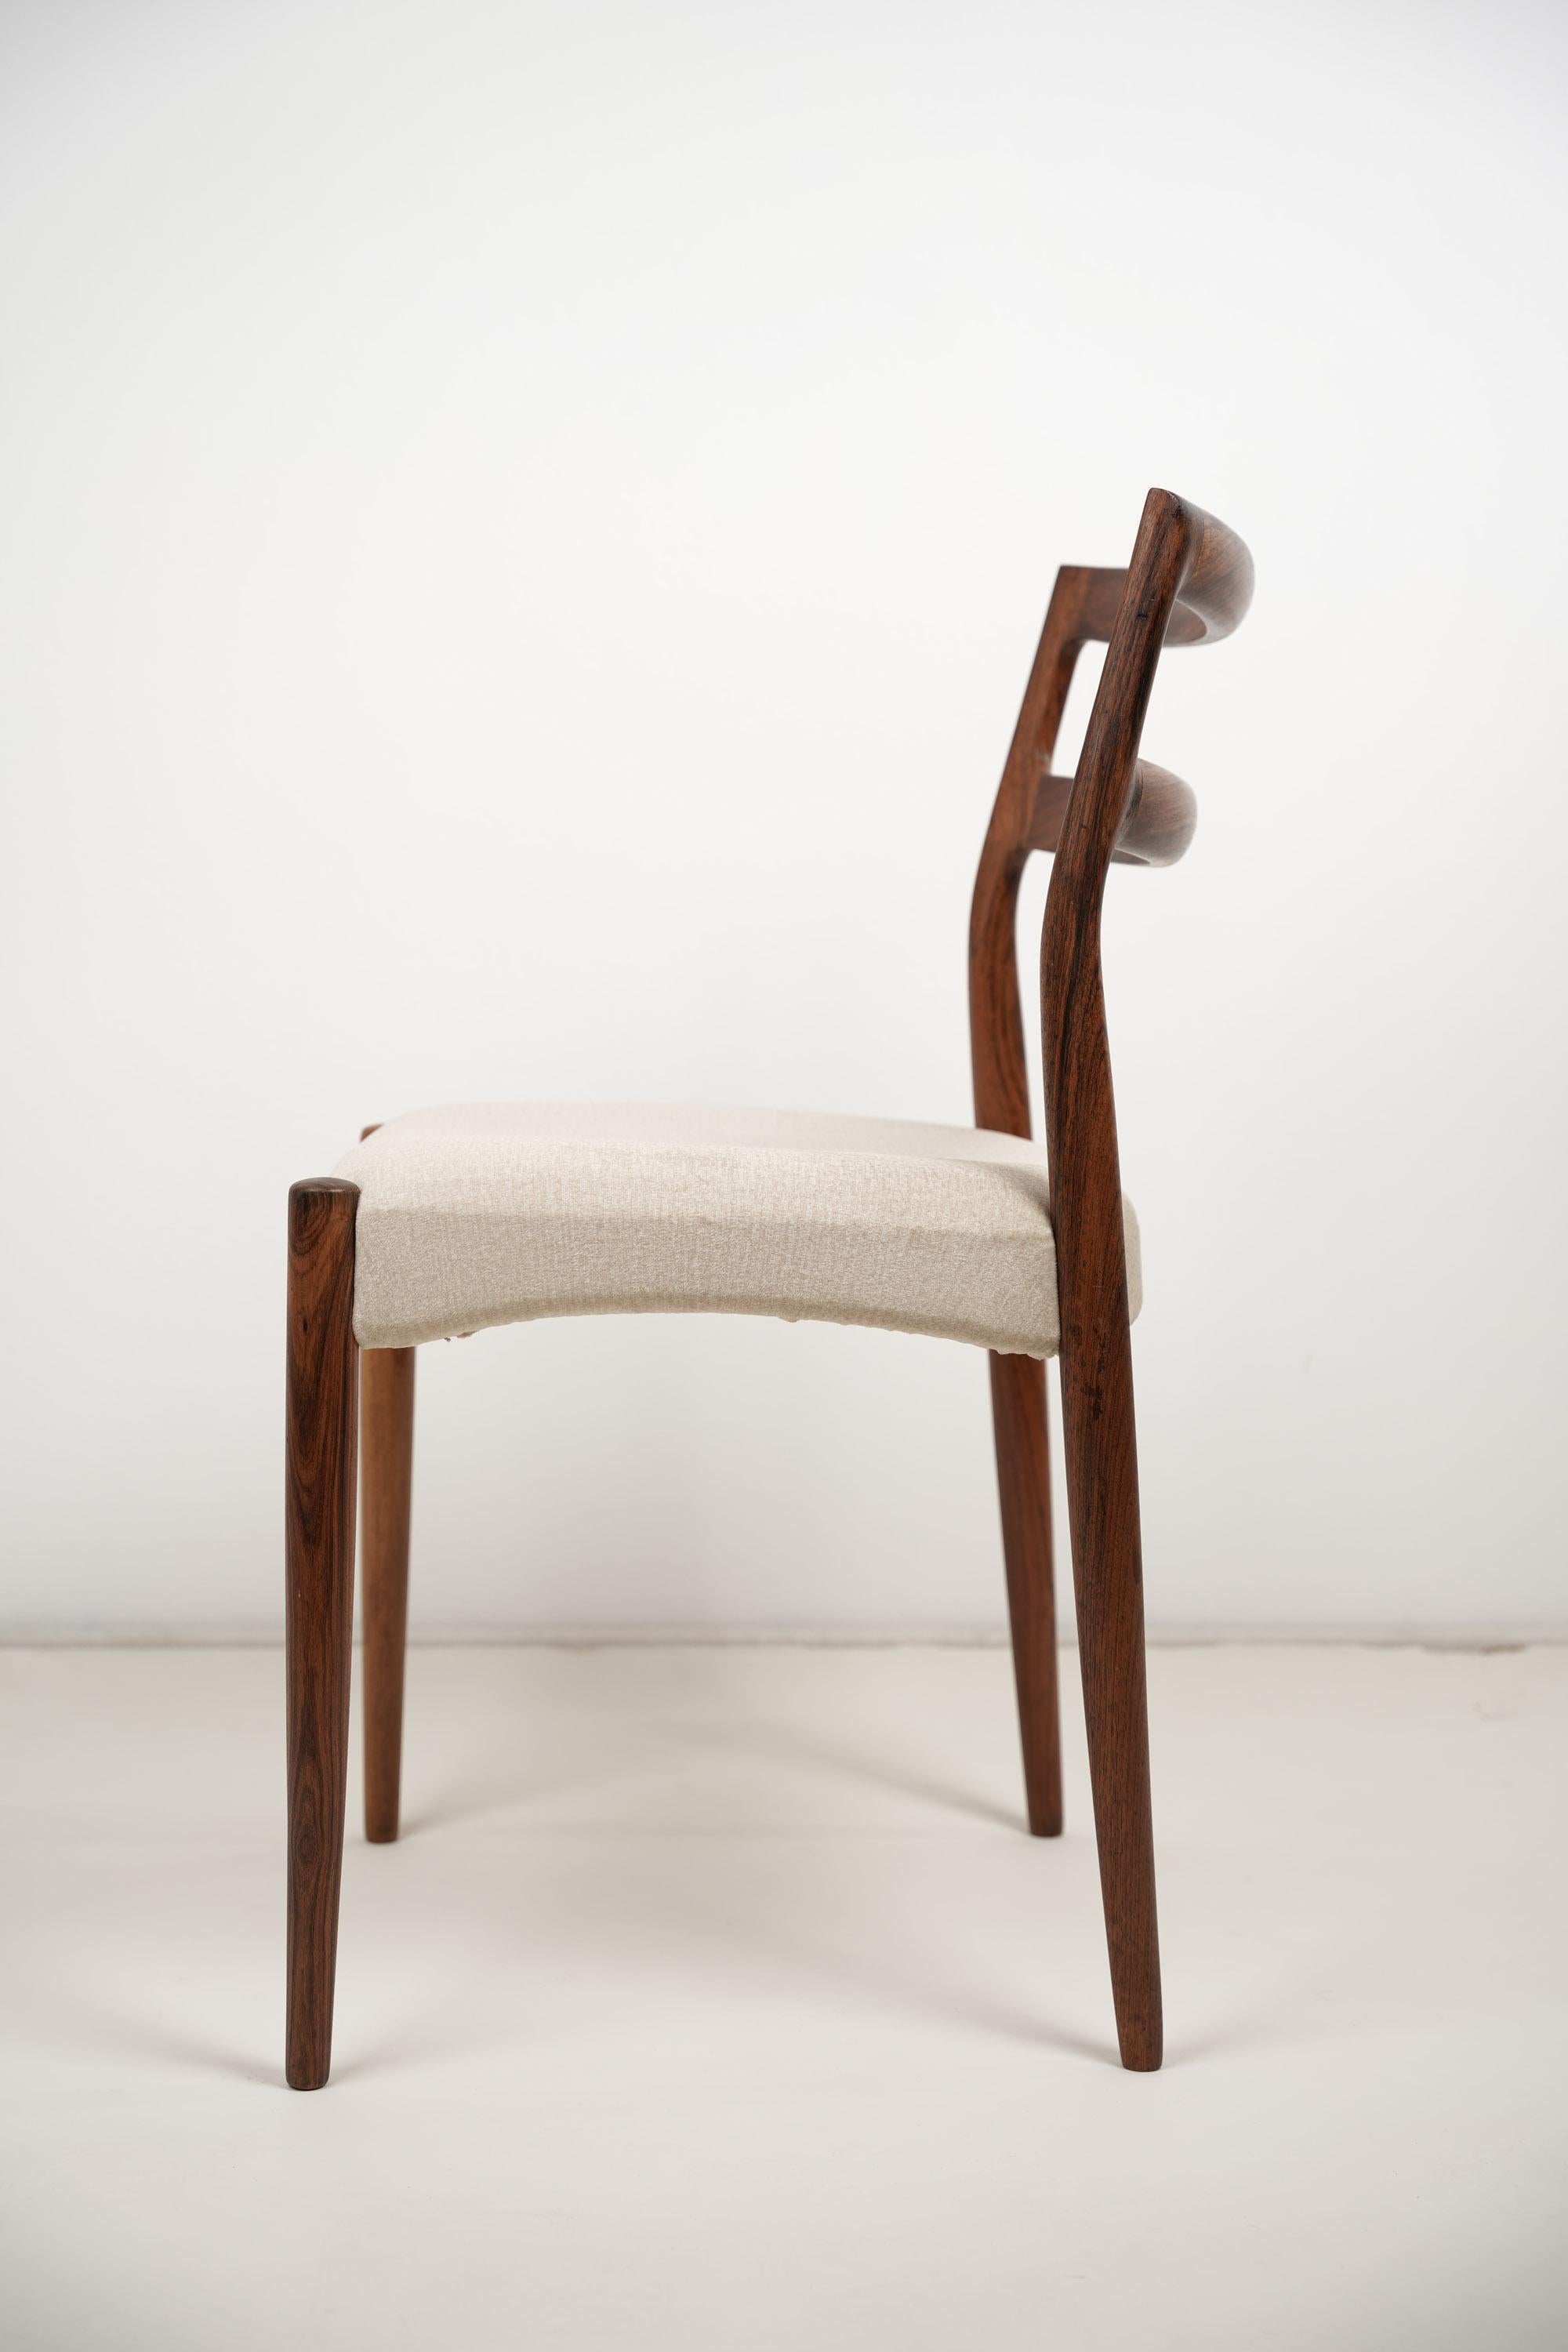 Danish Johannes Andersen Dining Chair for Uldum 1960s For Sale